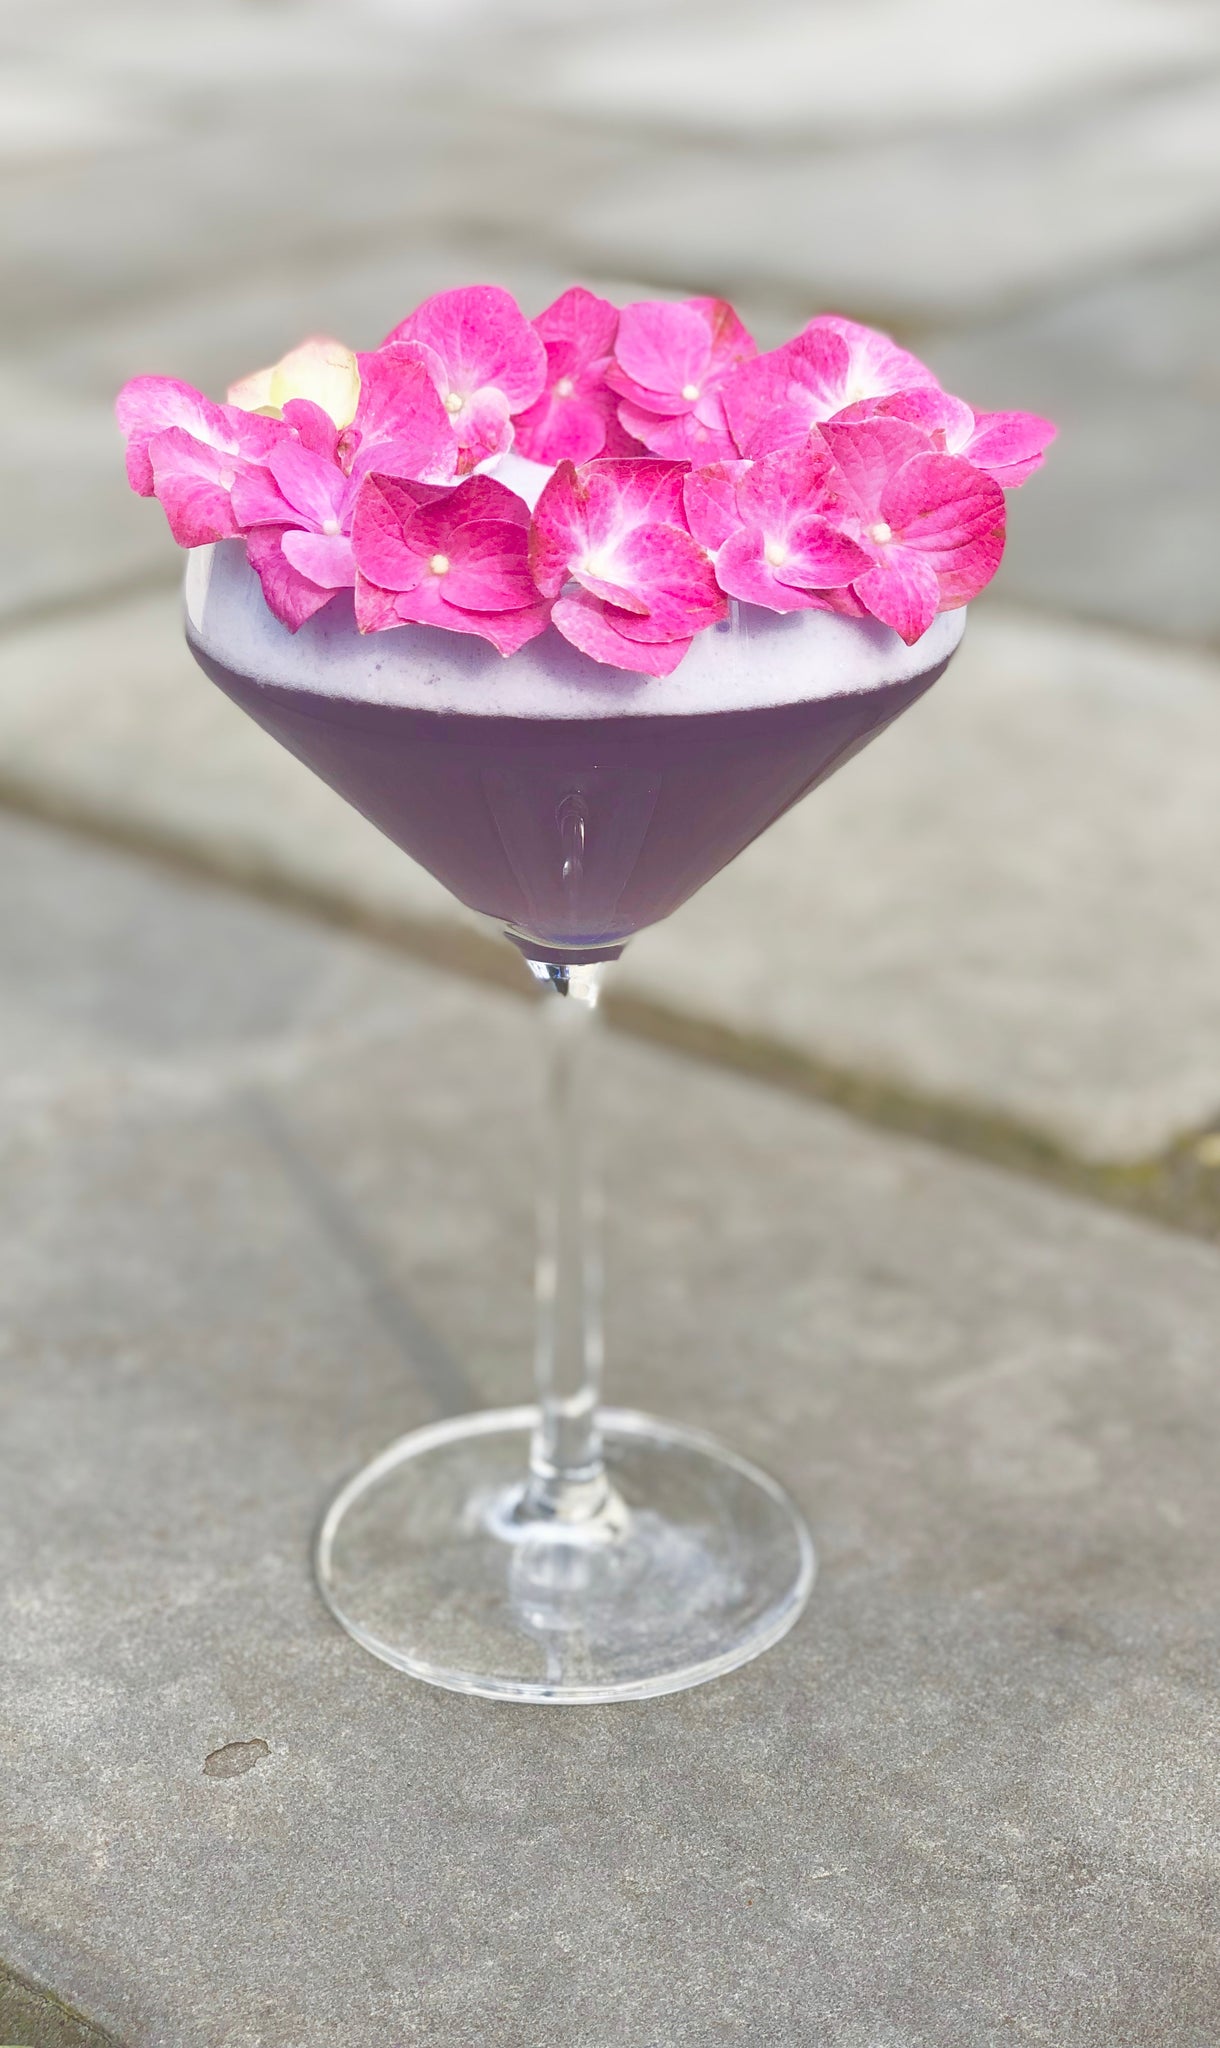 Premium Non-Alcoholic Rose Infused Mixer, 6.76 Oz. (Single) – Jardin  Infusion Florale